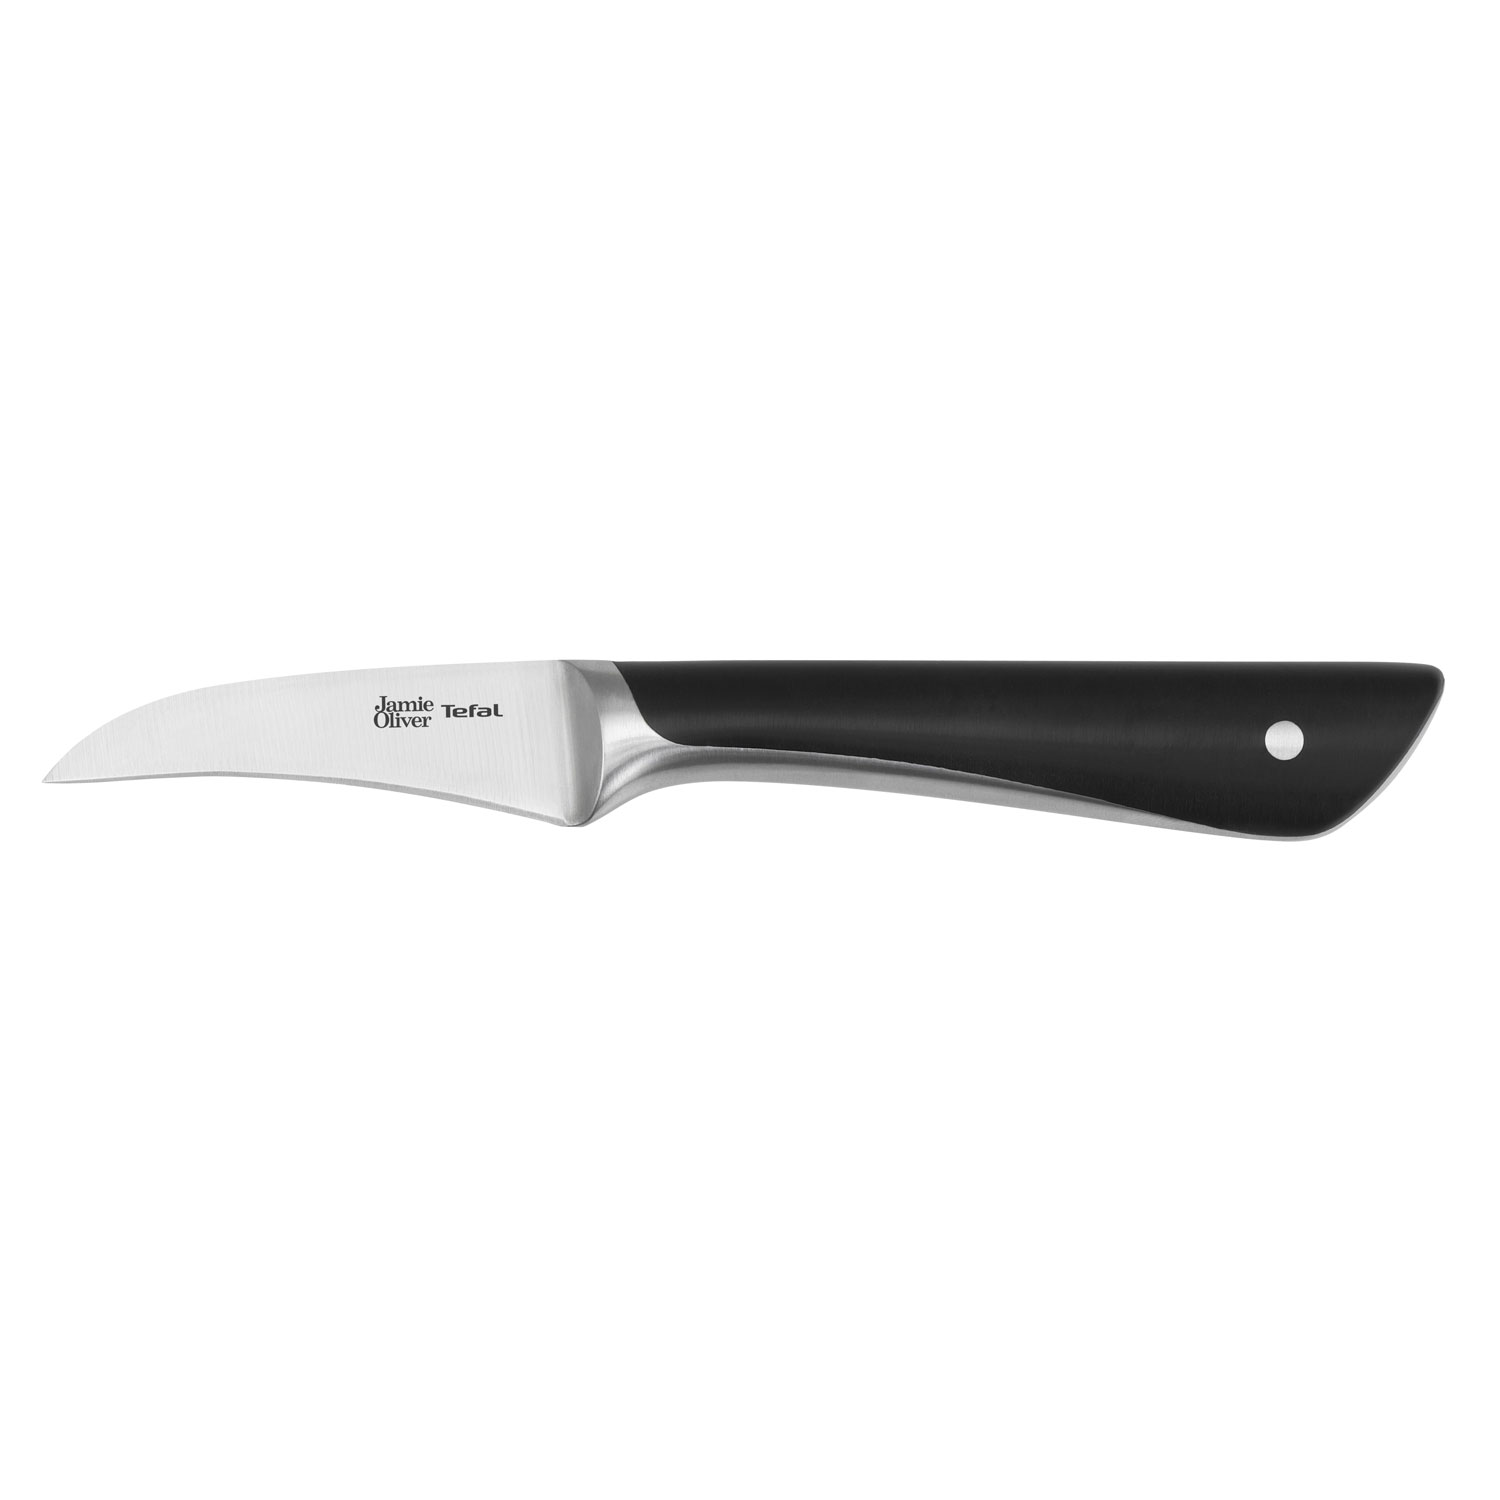 https://api-prod.royaldesign.se/api/products/image/2/tefal-jamie-oliver-knife-7-cm-0